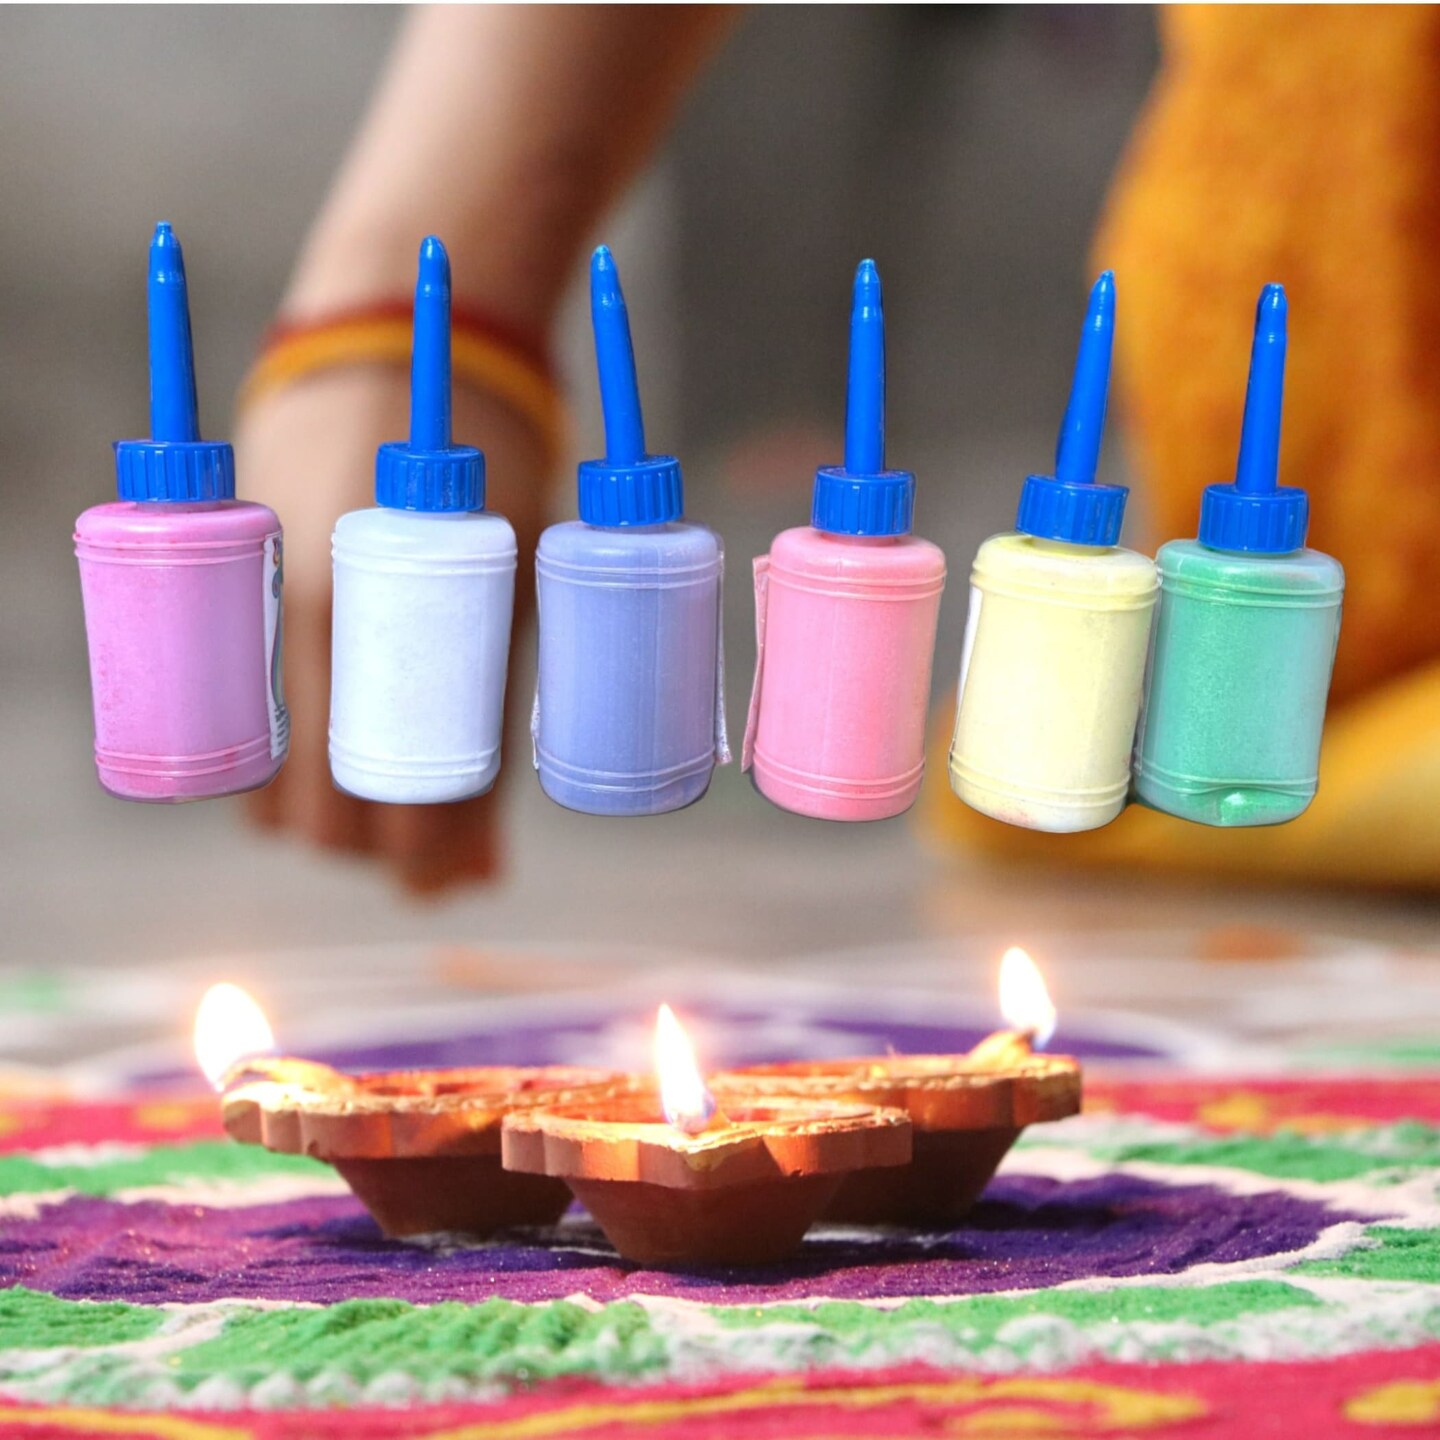 Diwali Rangoli Sand Colors, Rangoli Colors With Nozzle, Home Decor:10 Pcs